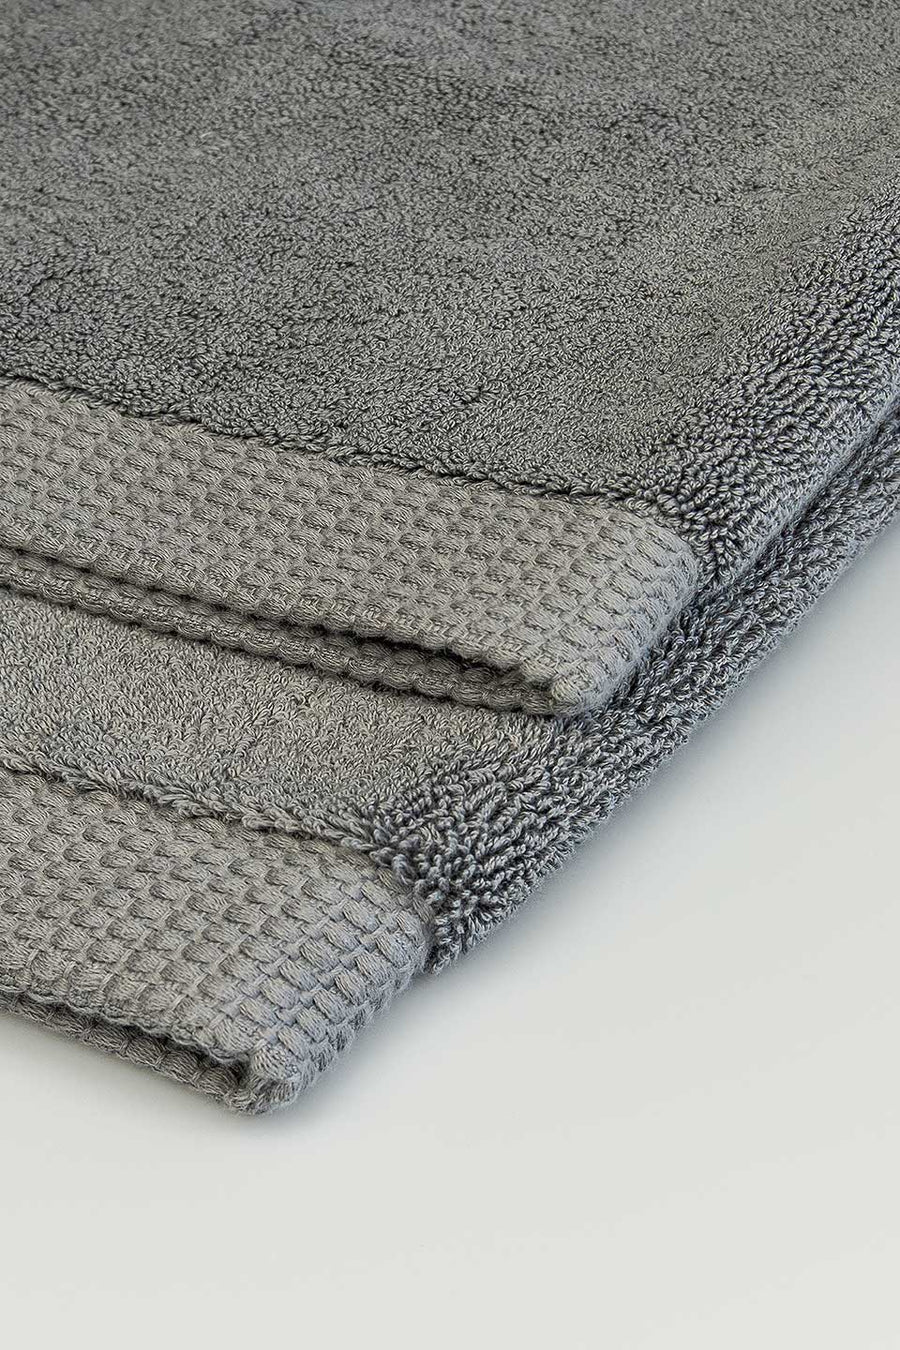 Gray Egyptian Cotton™ Bath Mat.